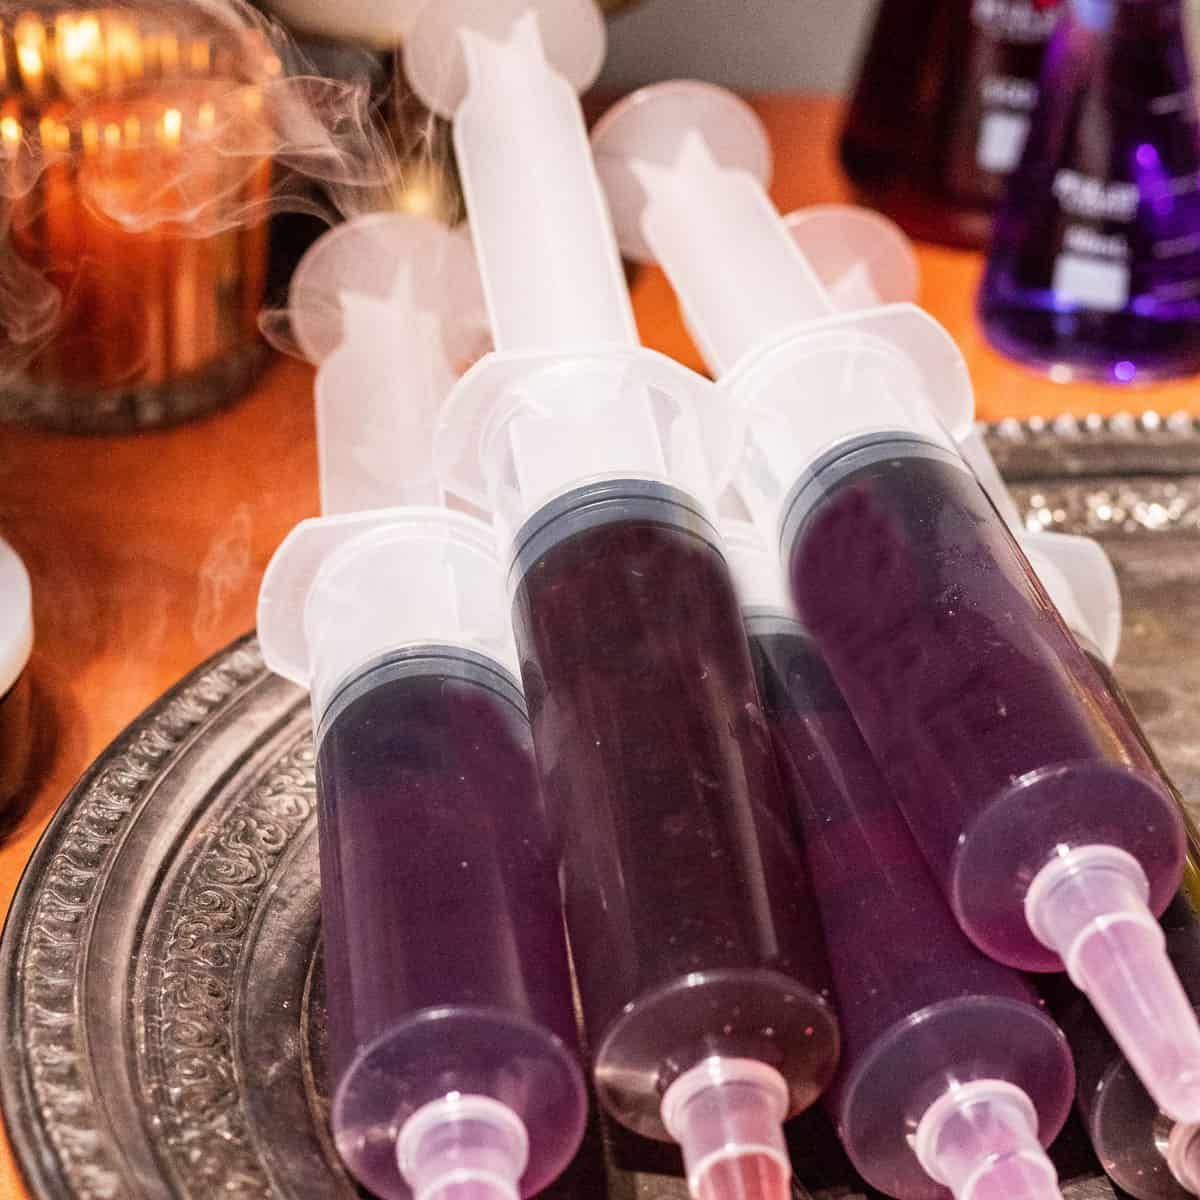 How to Make Syringe Jello Shots for Halloween